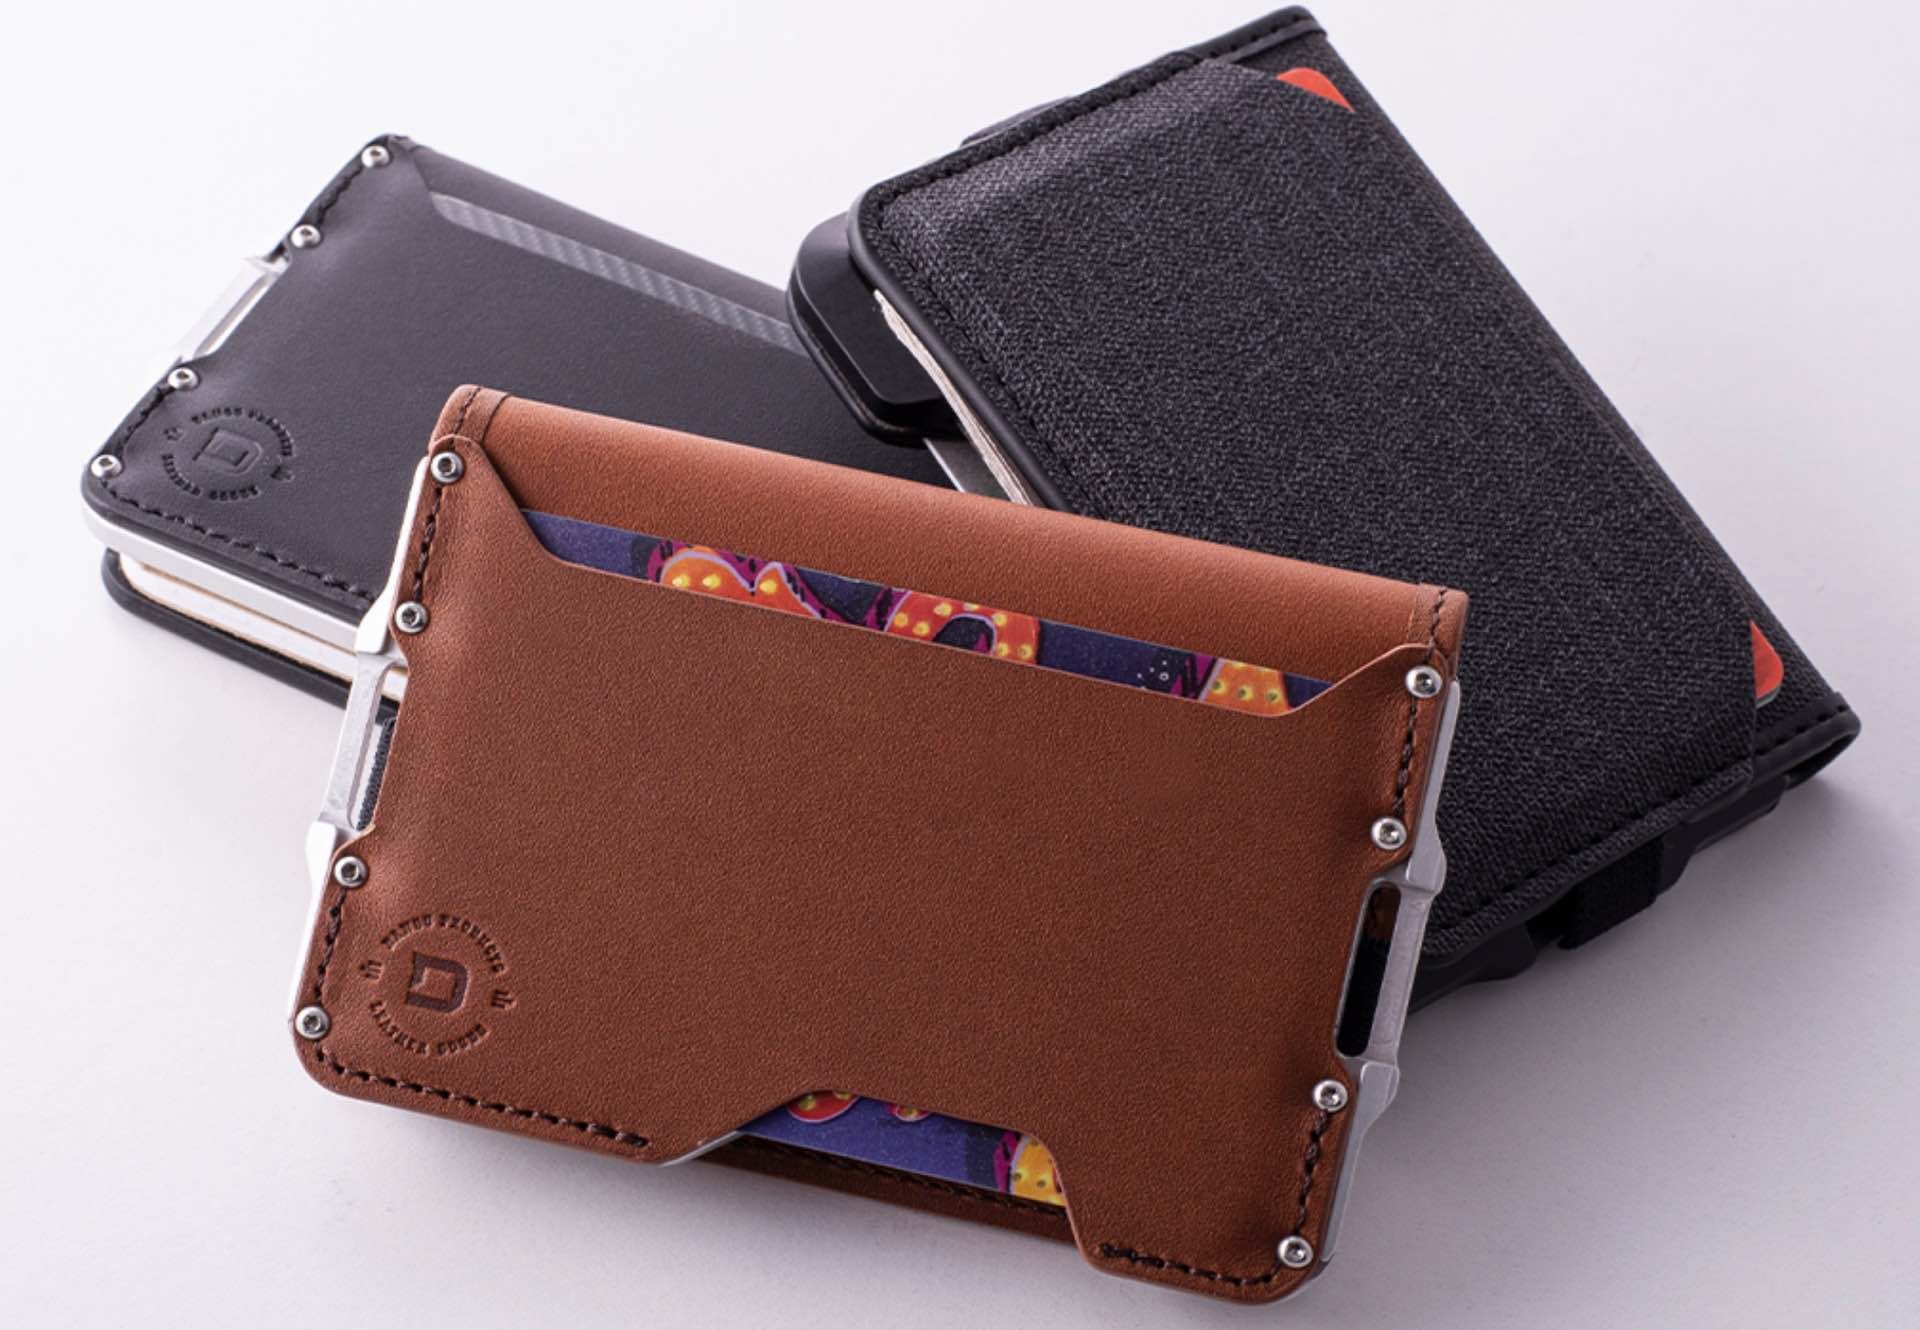 Dango D03 aluminum + leather bifold wallet. ($39)